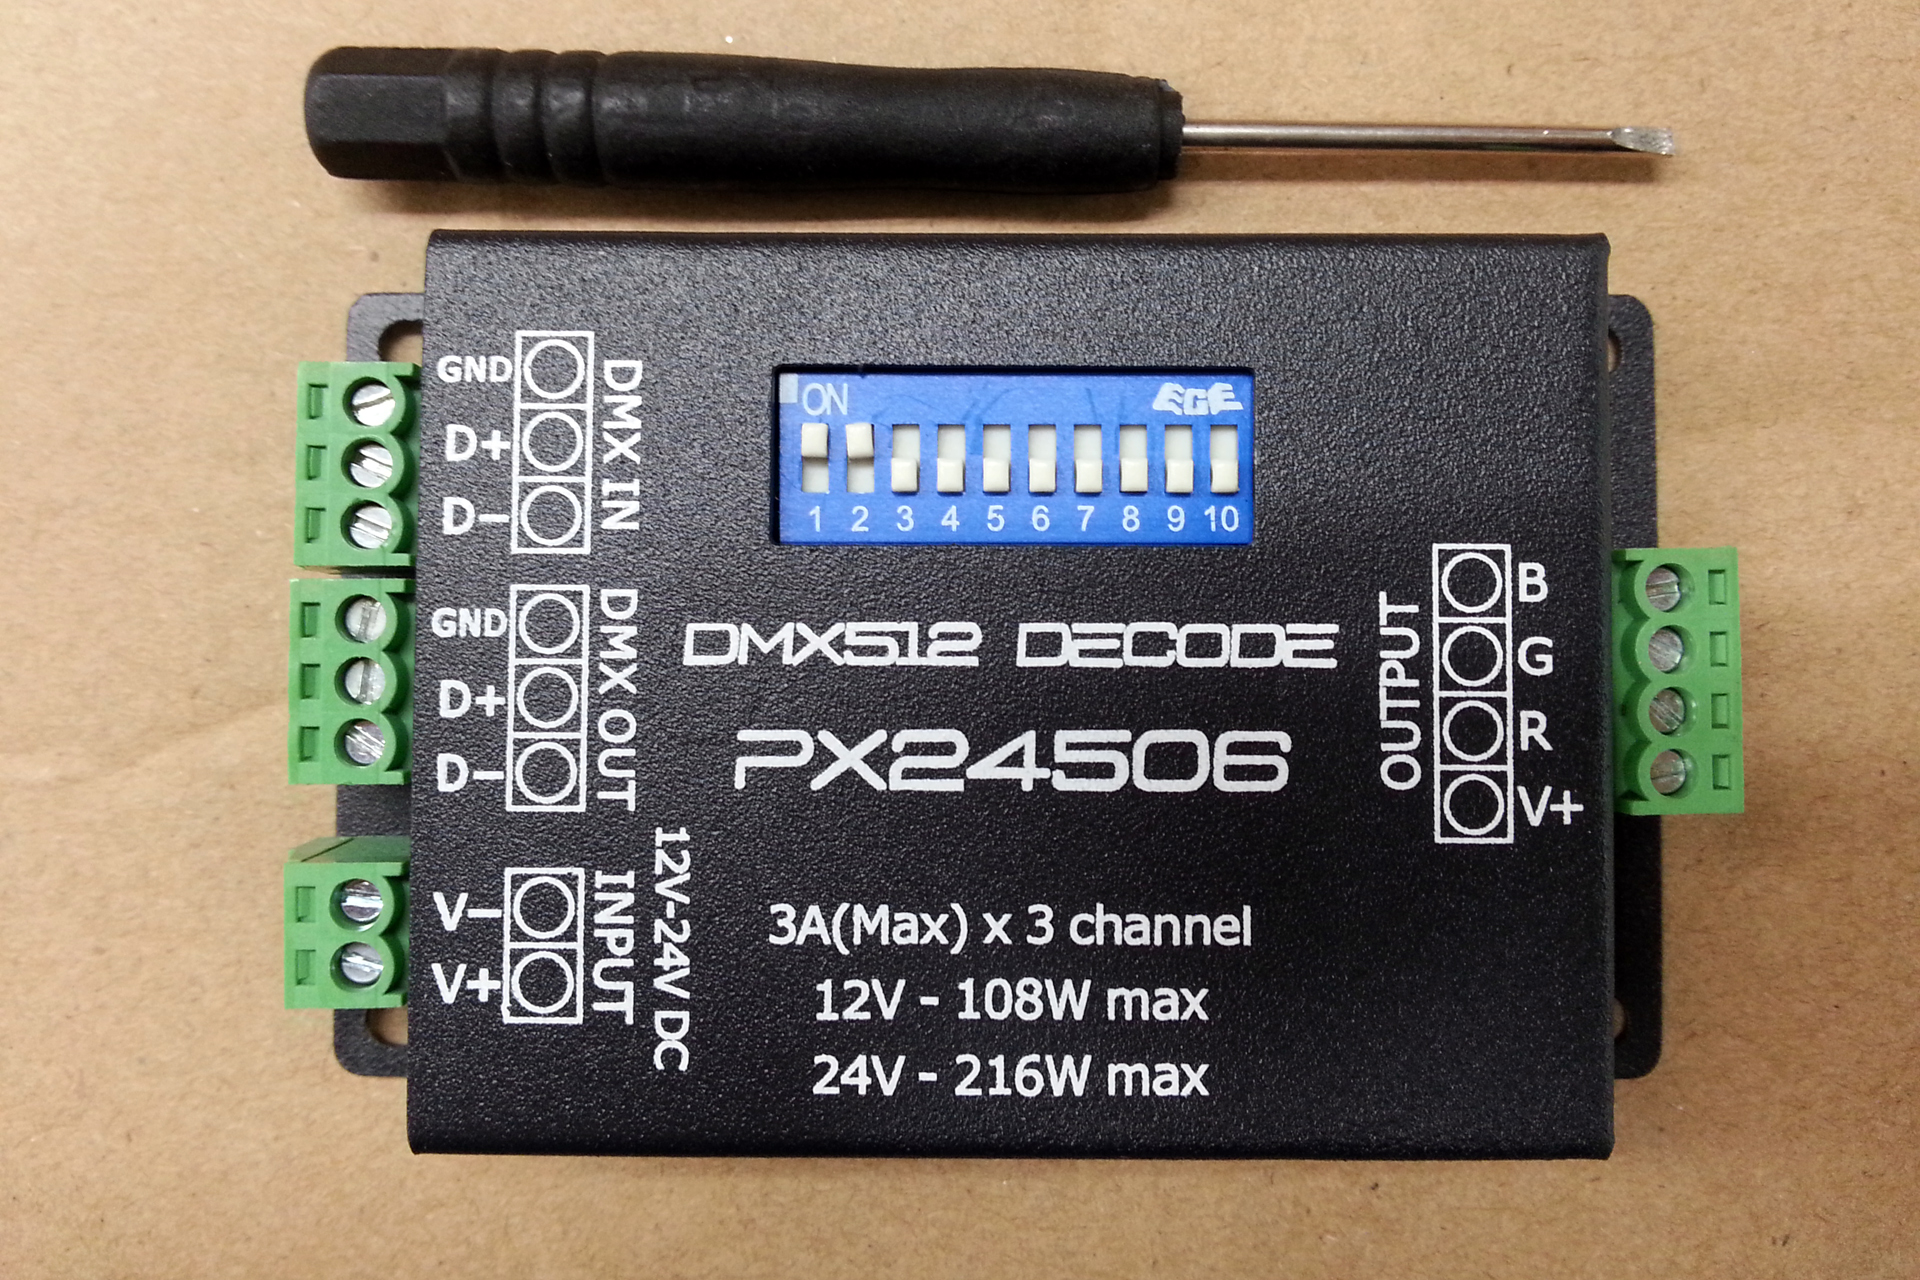 PX24506_DMX512_decoder_controller_with_screwdriver